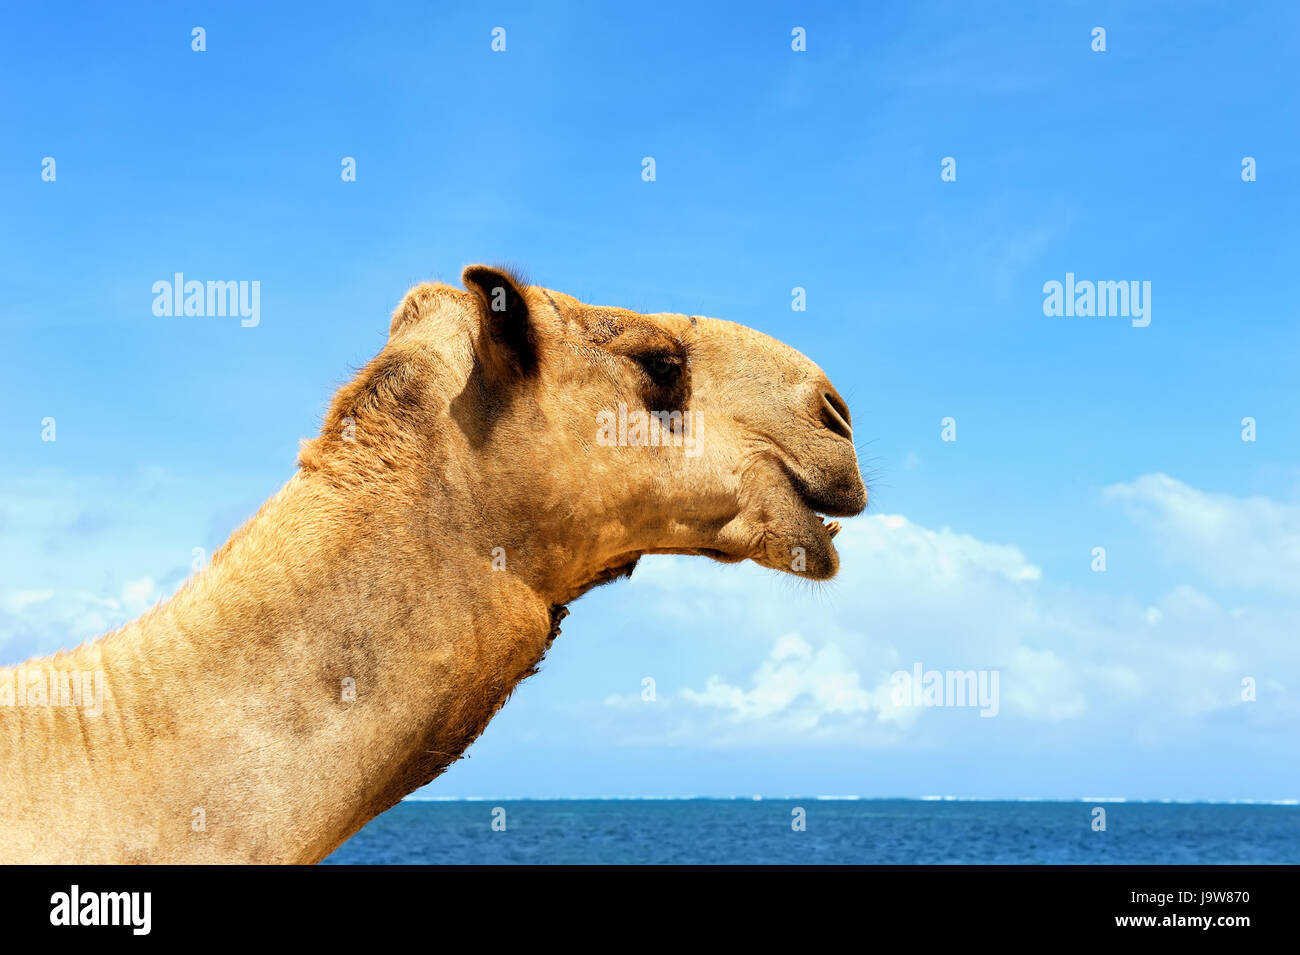 Kamel stehend am Strand Ozeanküste mit blauem Himmel Stockfoto